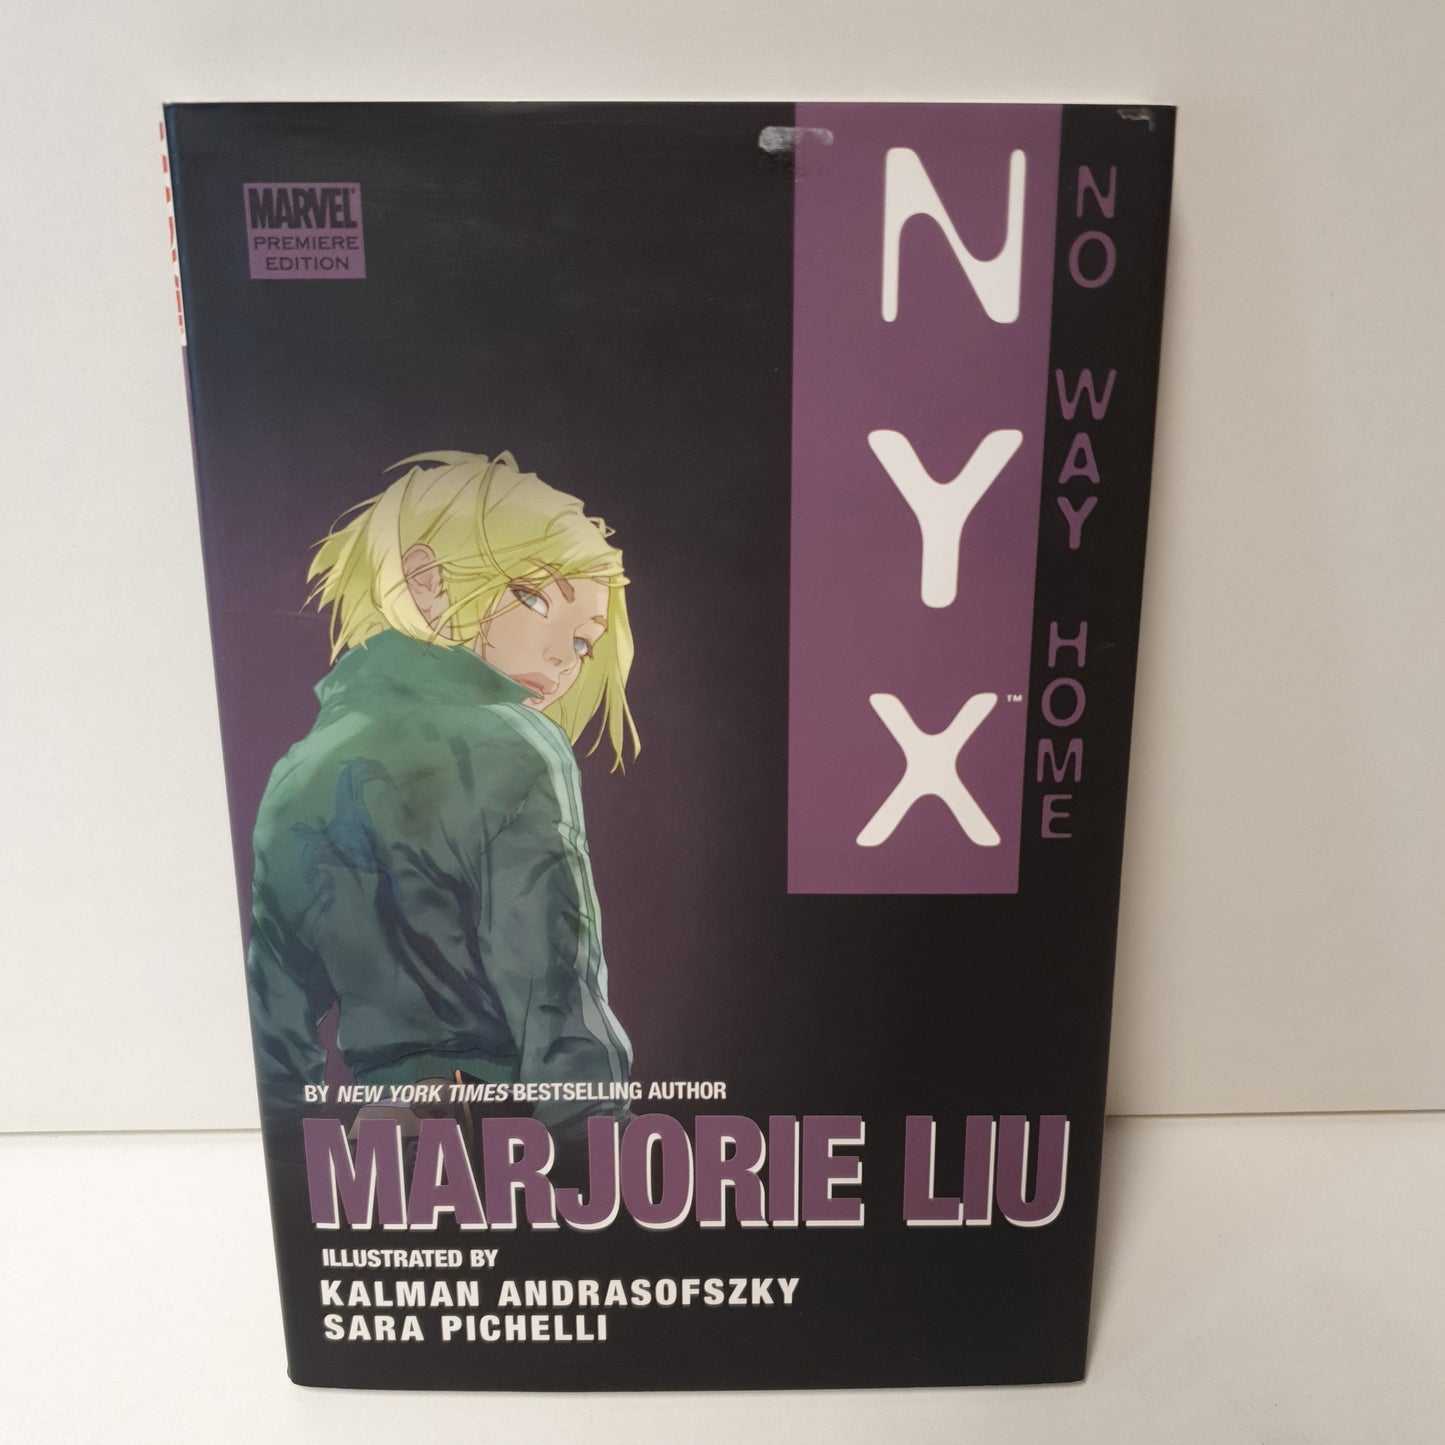 NYX No Way Home by Marjorie Liu (2009)